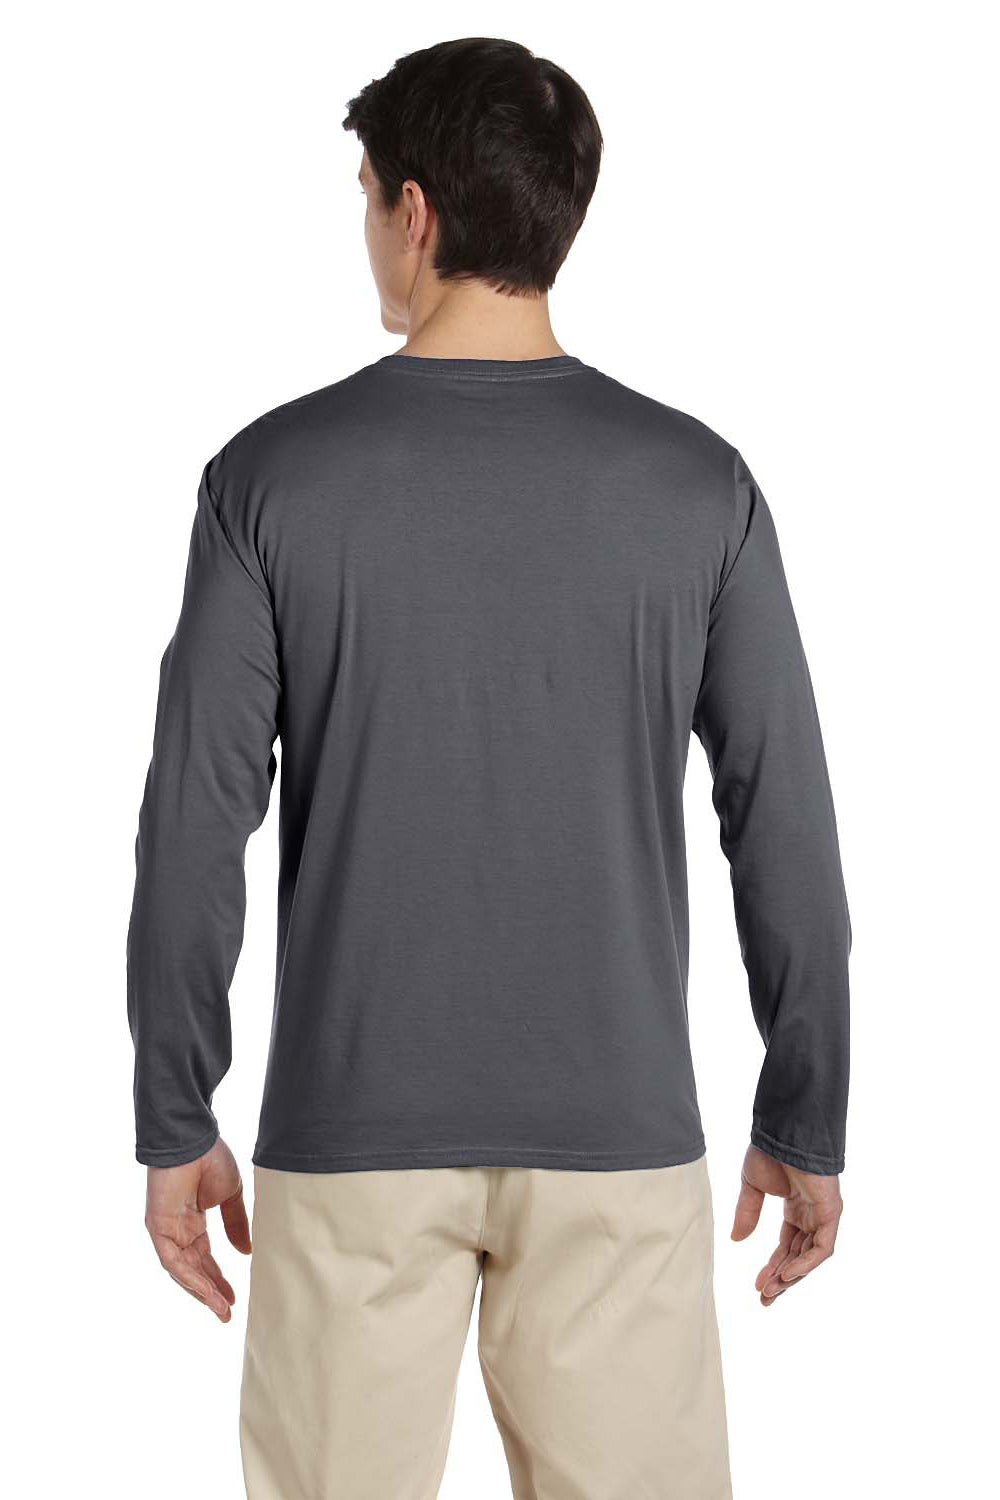 Gildan G644 Mens Softstyle Long Sleeve Crewneck T-Shirt Charcoal Grey Back